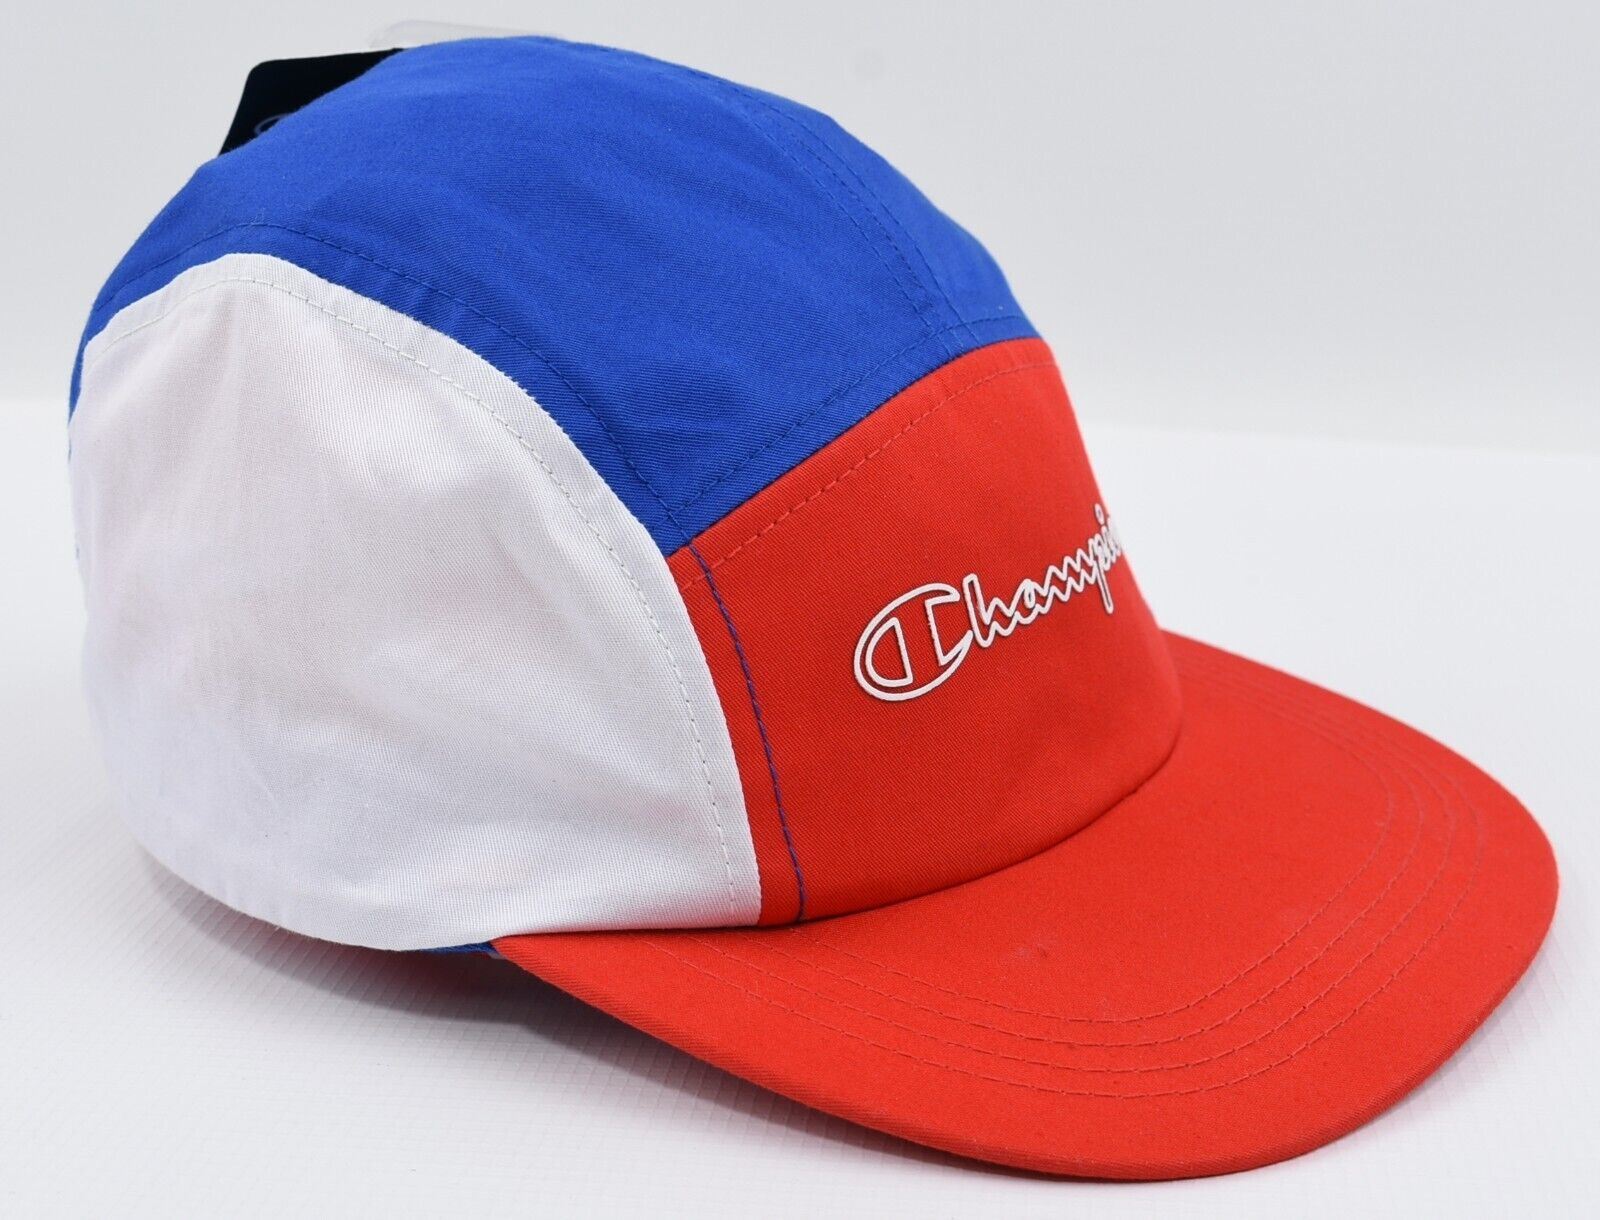 CHAMPION Boys' Kids' Flat Peak Cap, Hat, Red/Blue/White, One Size Youth